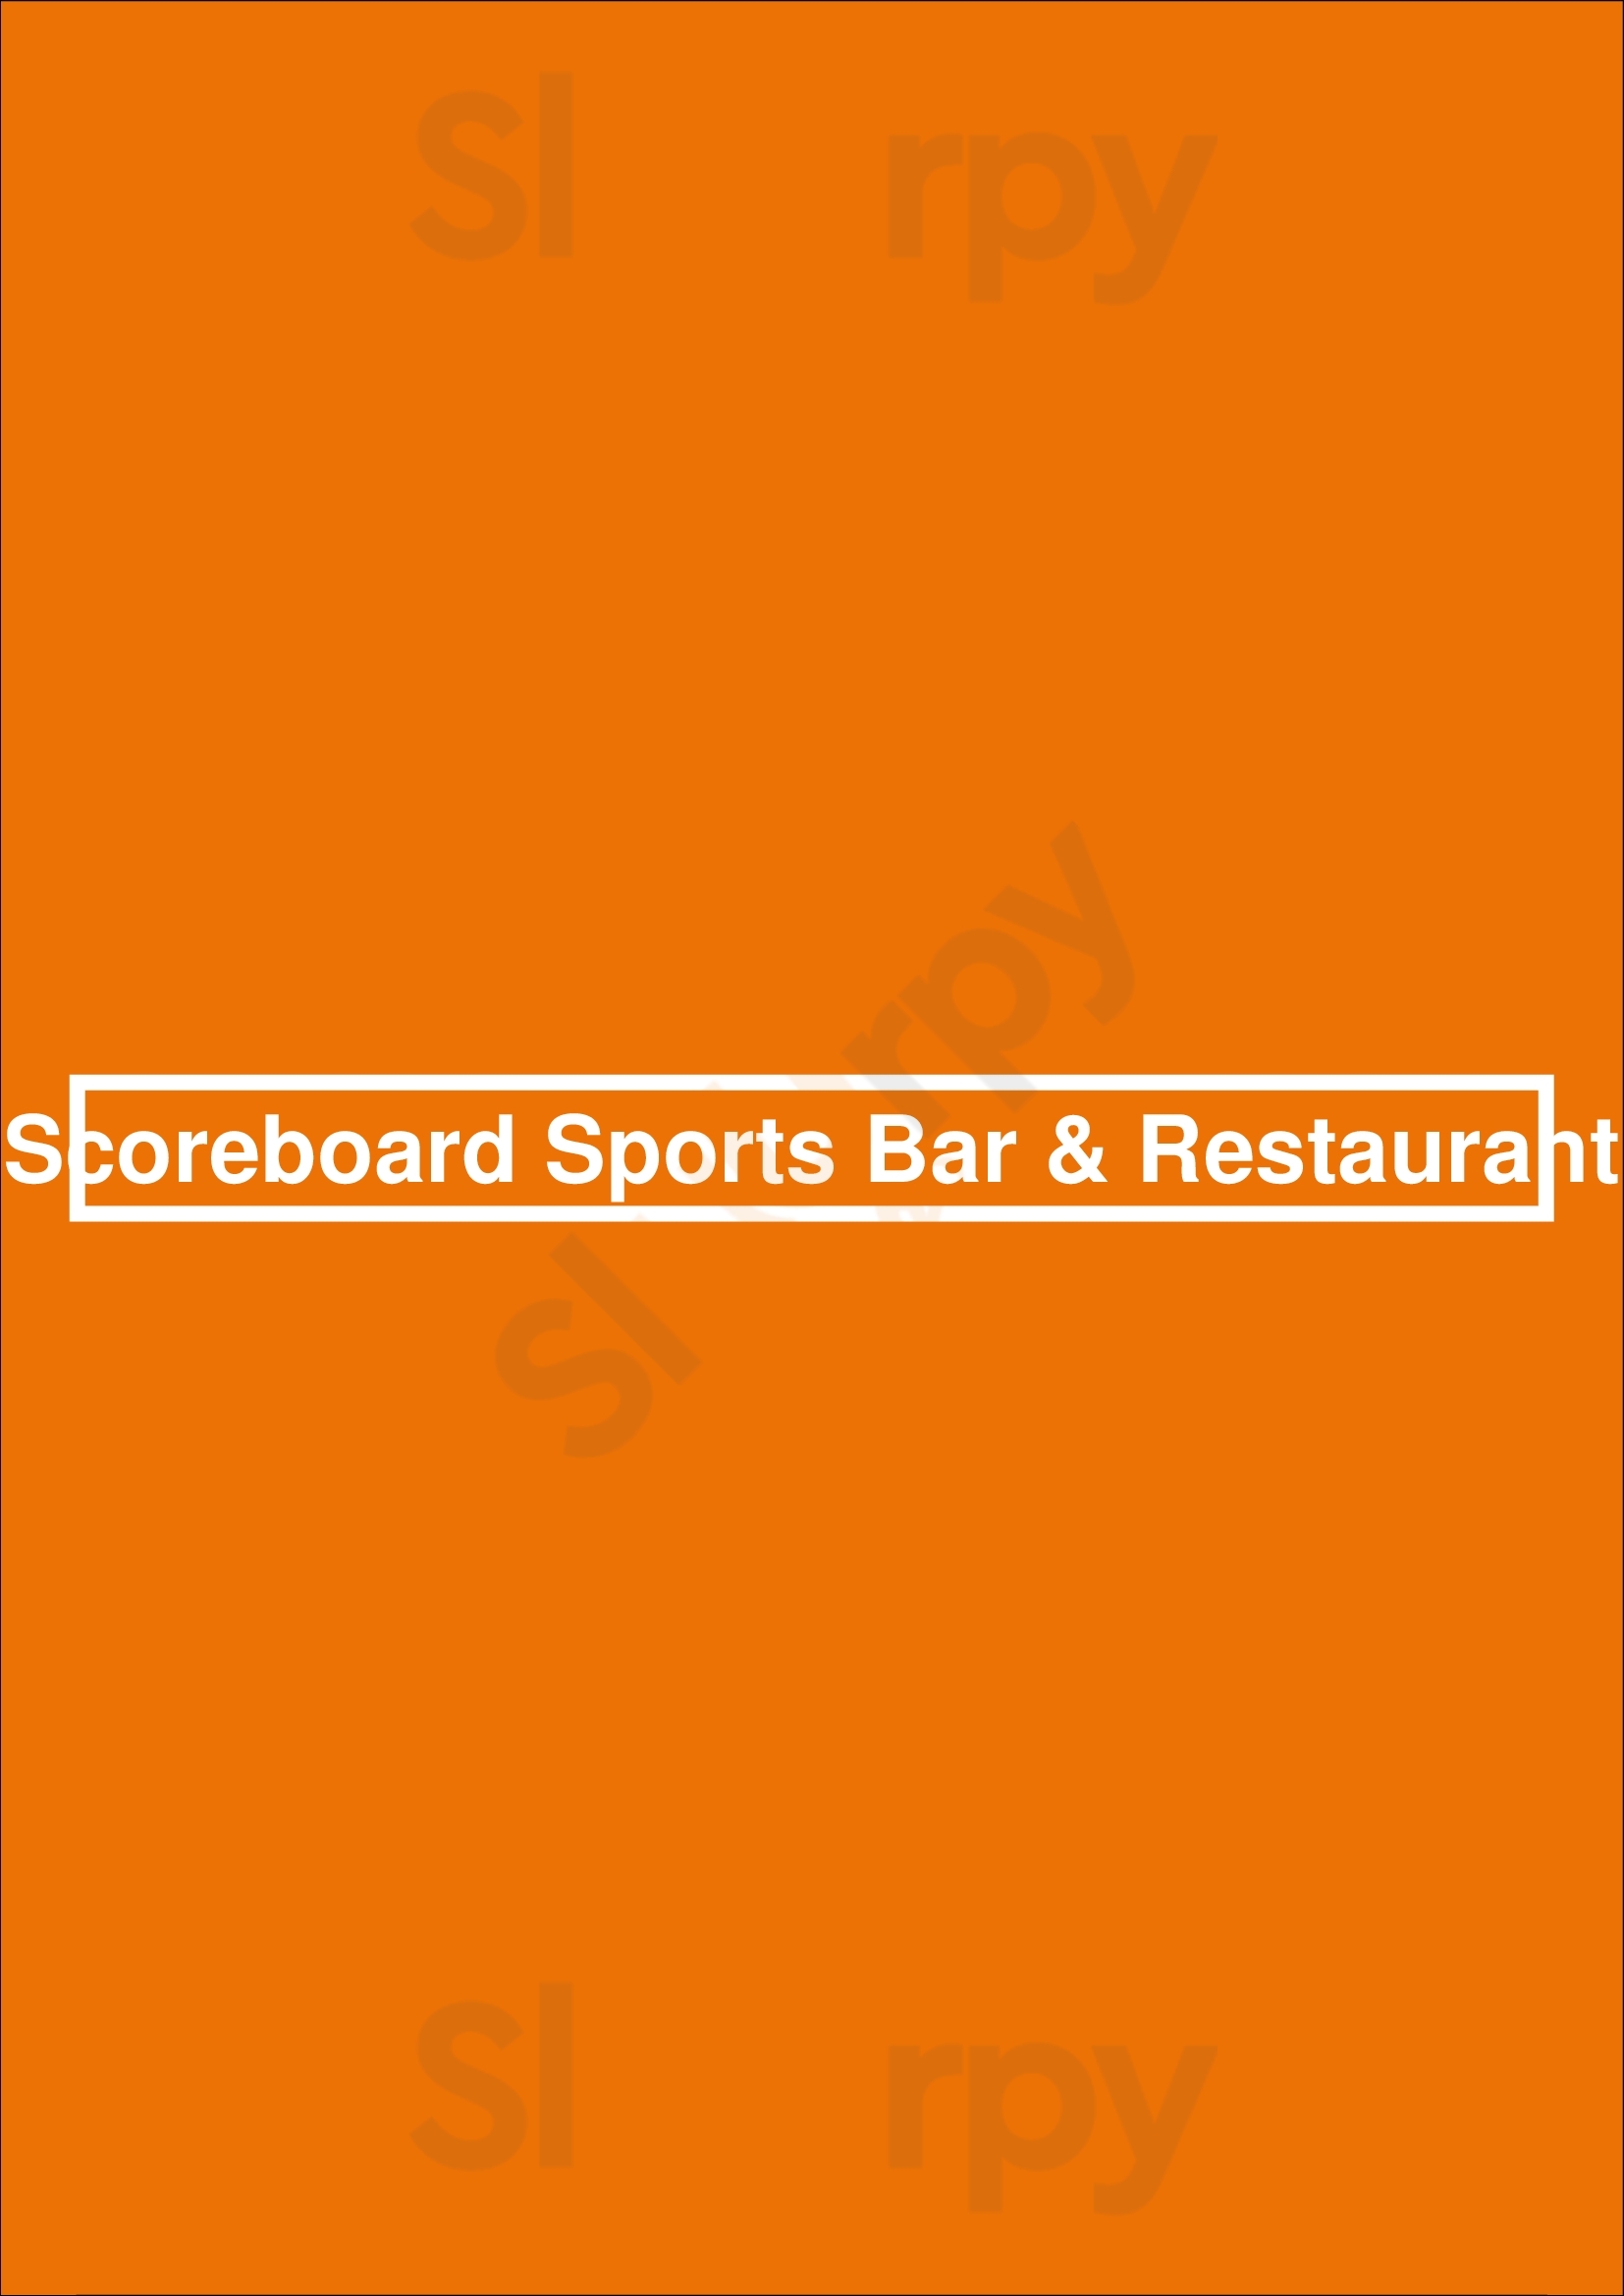 Scoreboard Sports Bar & Restaurant Austin Menu - 1